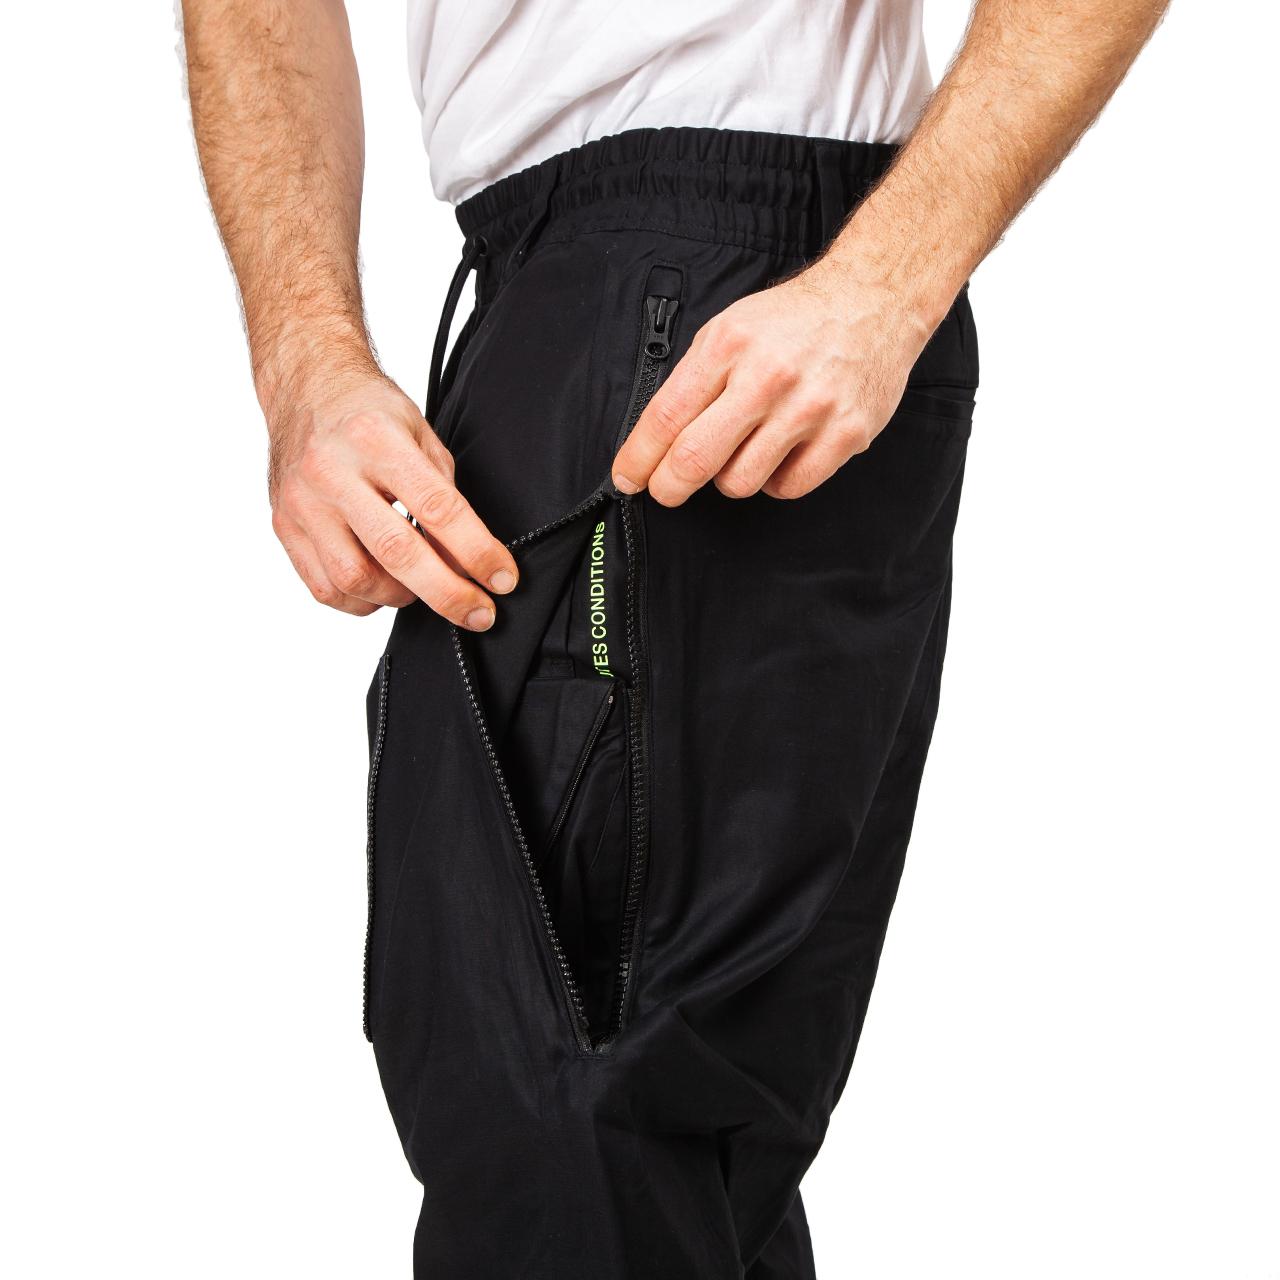 Nike Cotton Nike Nrg Acg Cargo Pant in Black for Men - Lyst